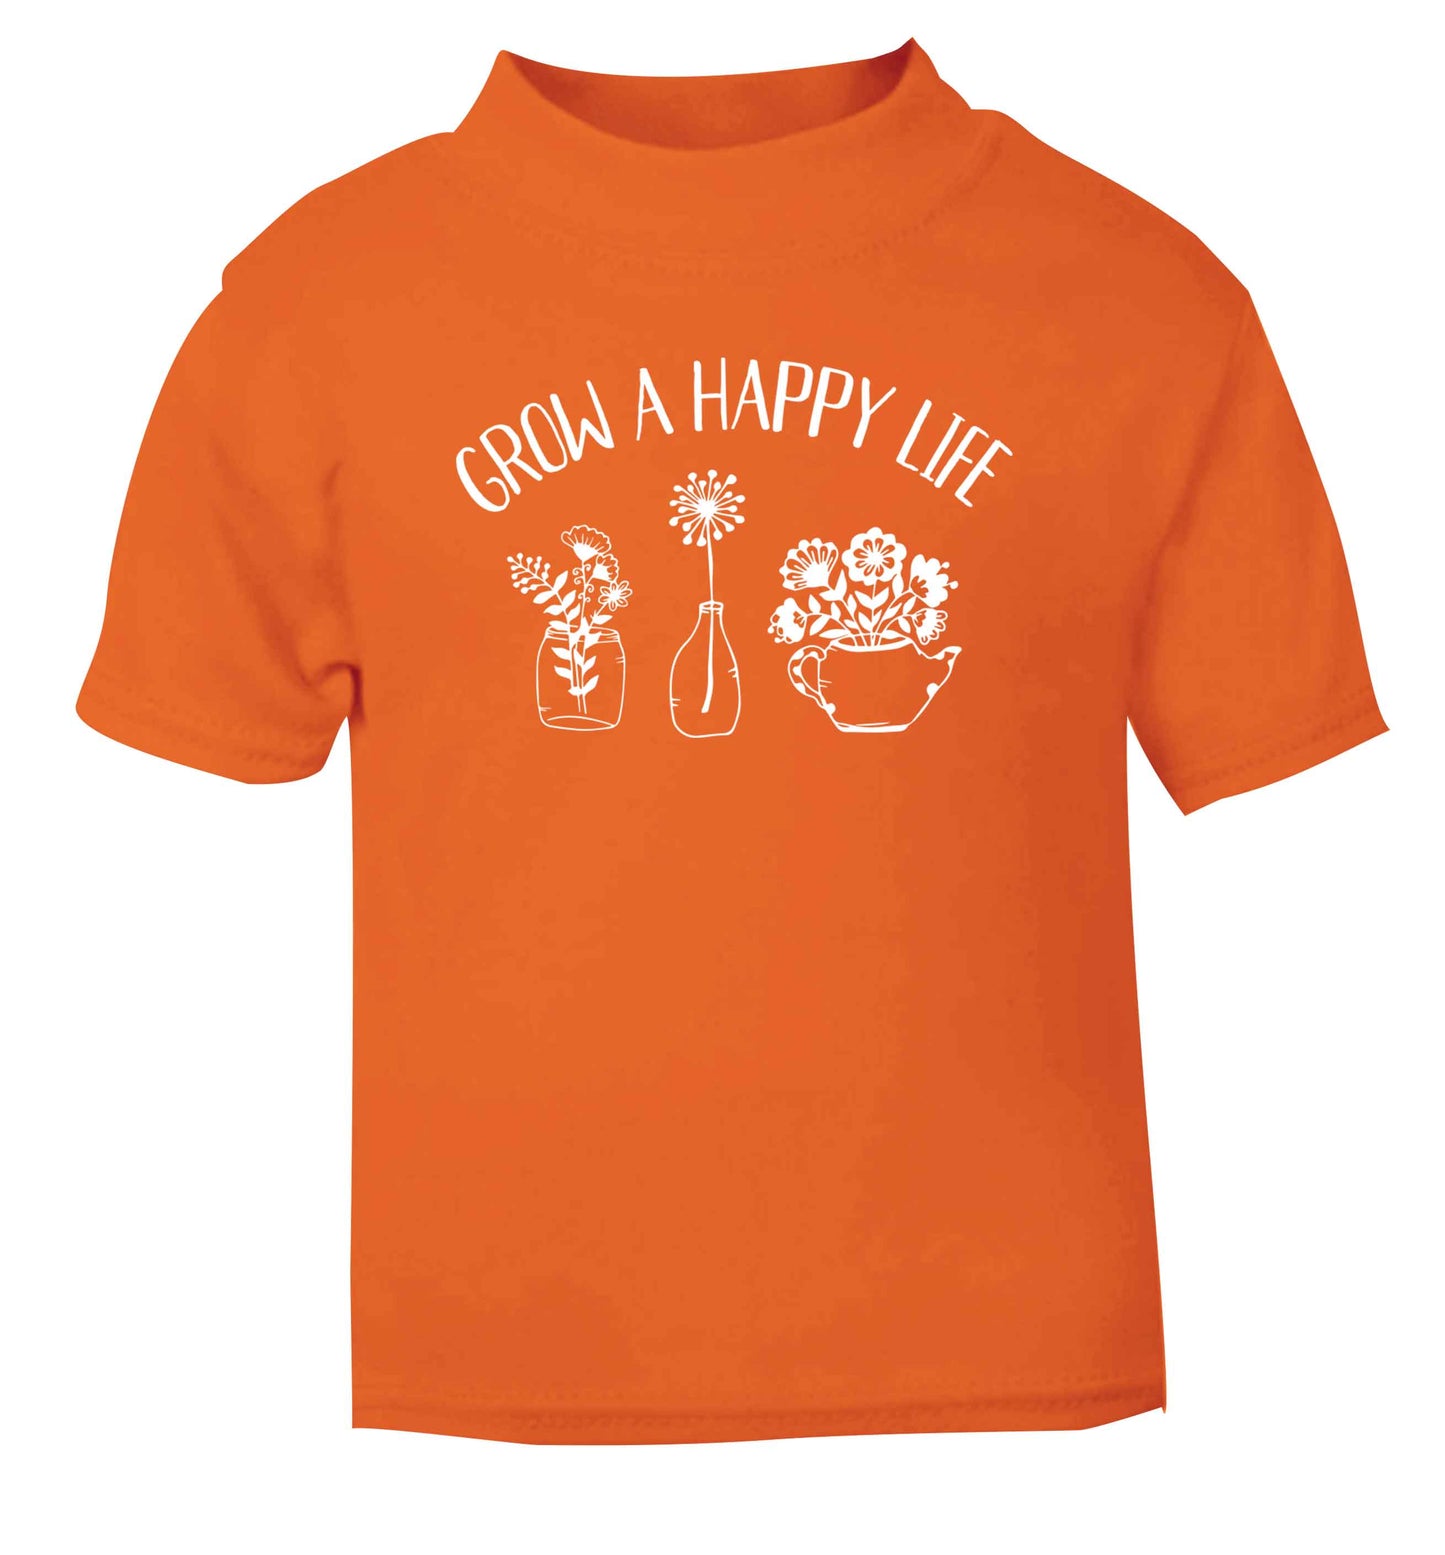 Grow a happy life orange Baby Toddler Tshirt 2 Years